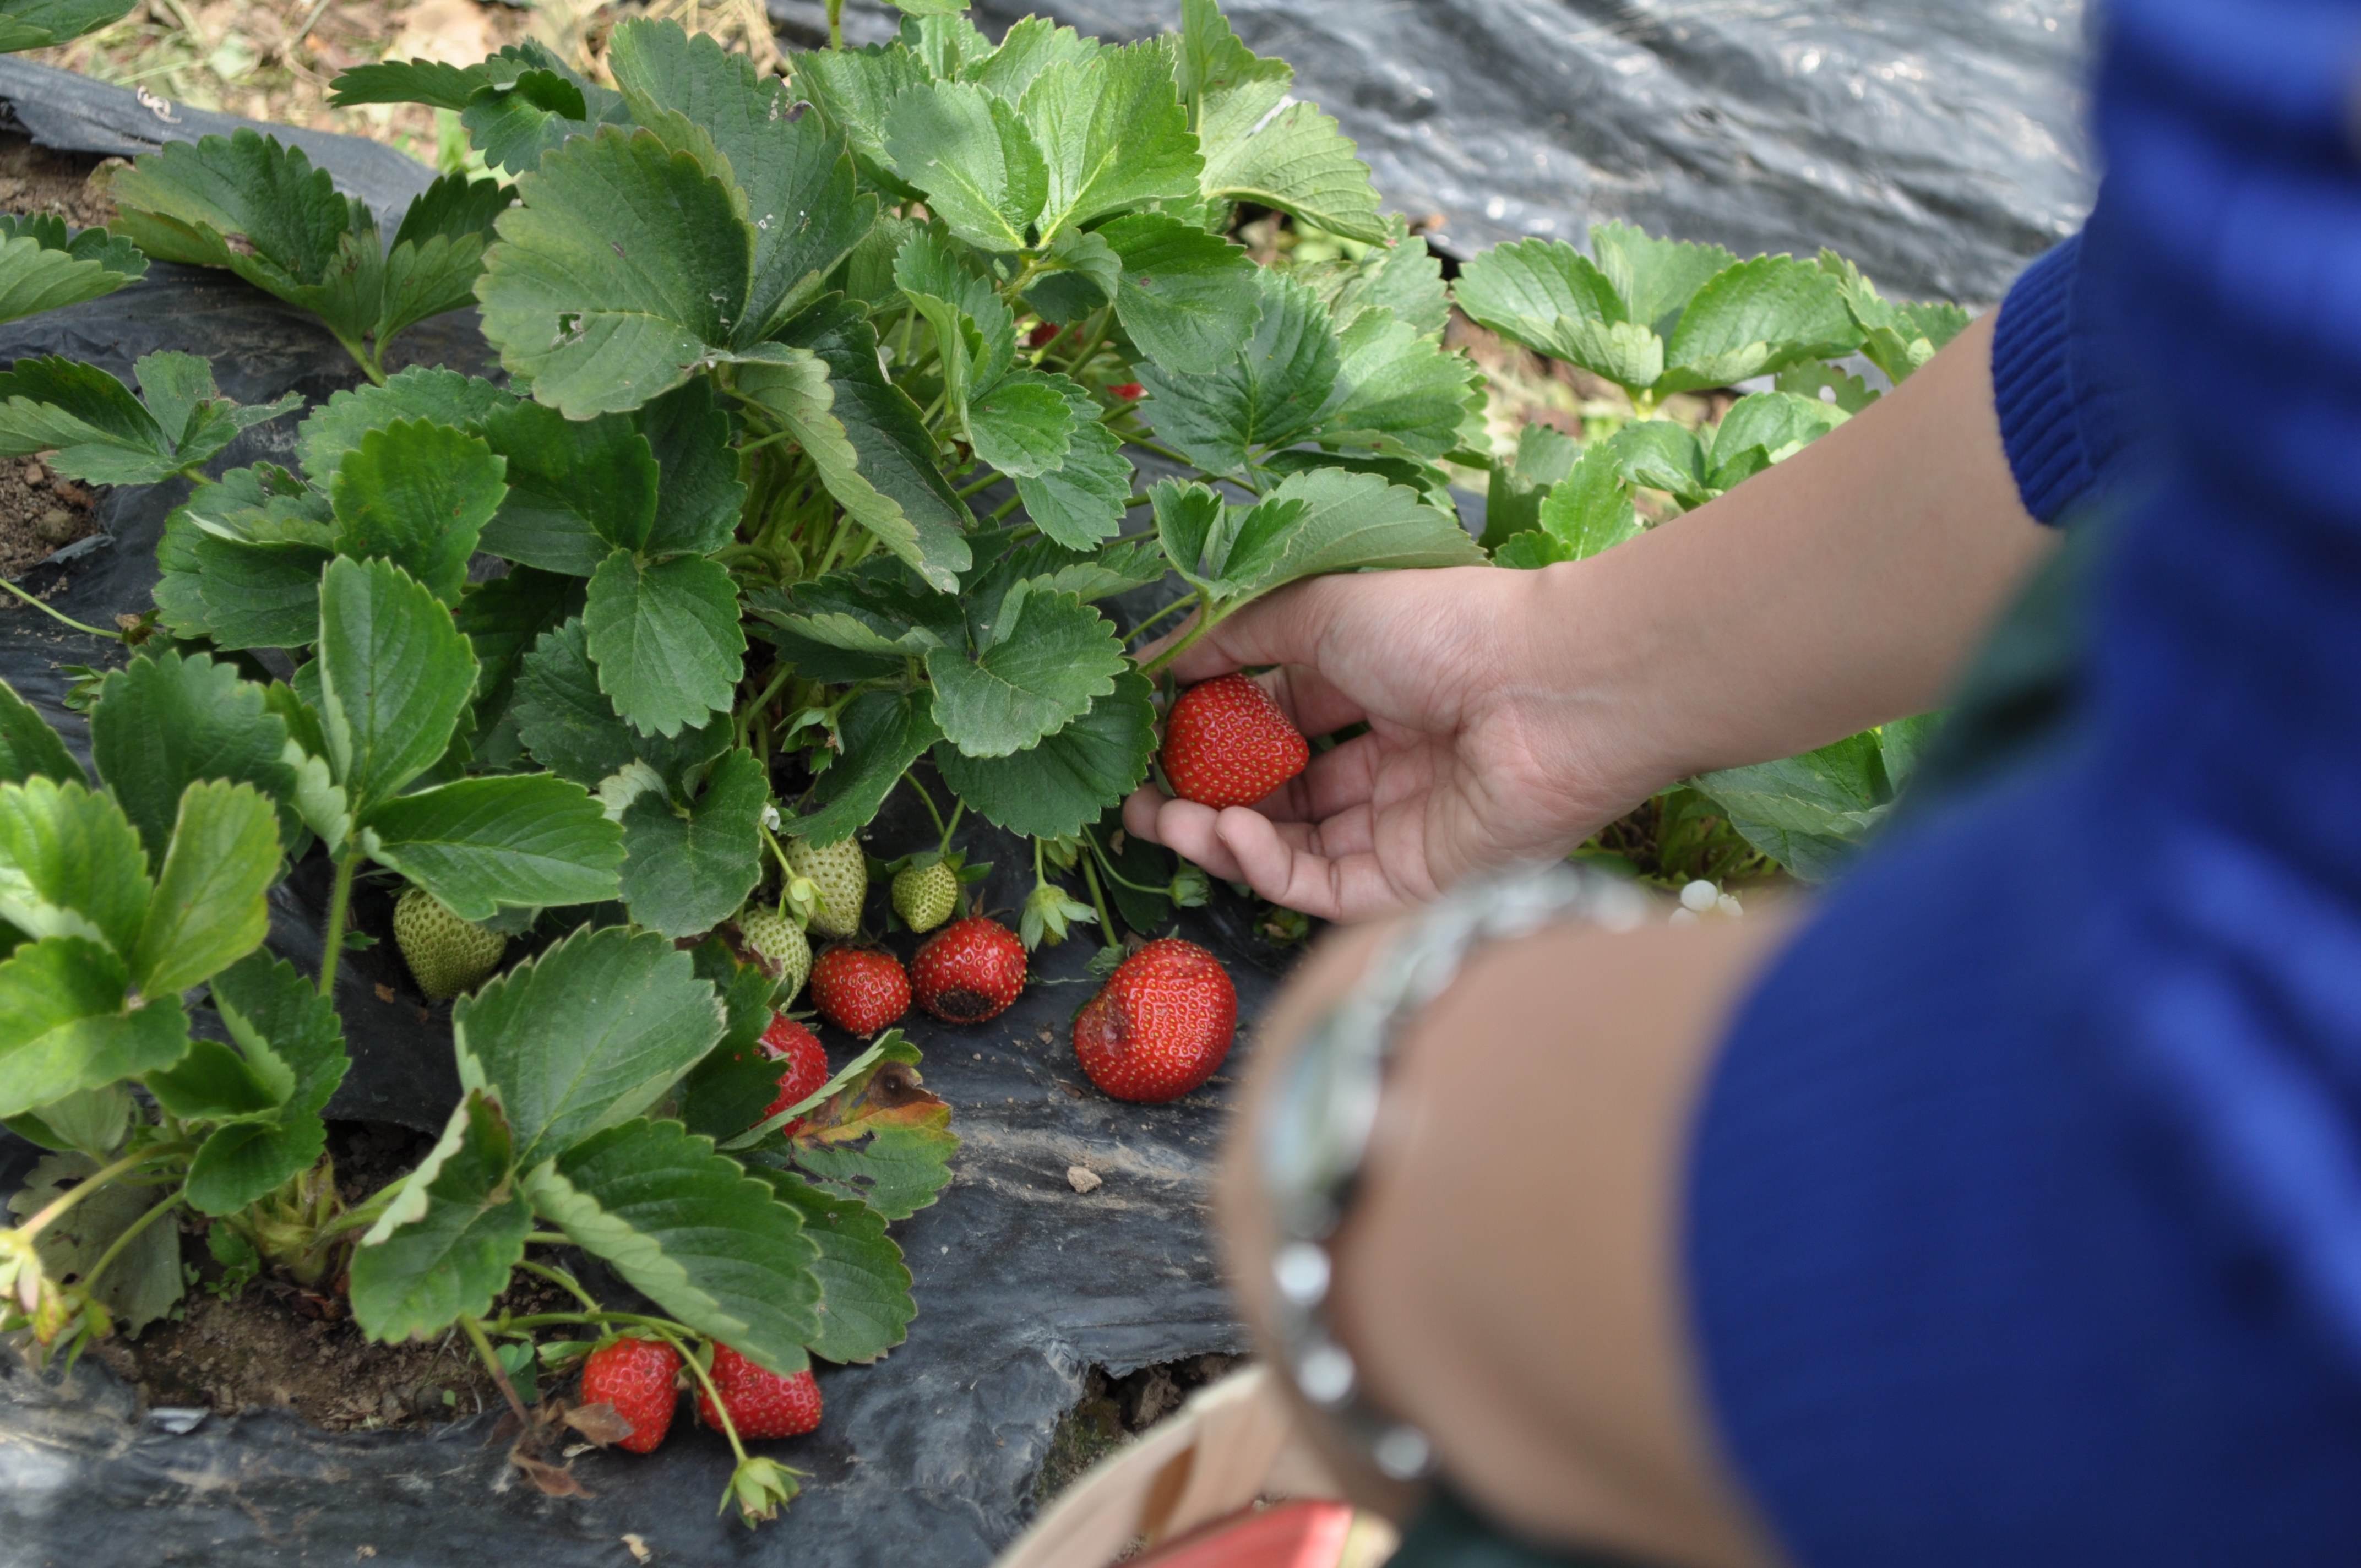 En Route Strawberry Picking, Strawberry Picking, Strawberry Fields, Strawberries, La Trinidad, Baguio